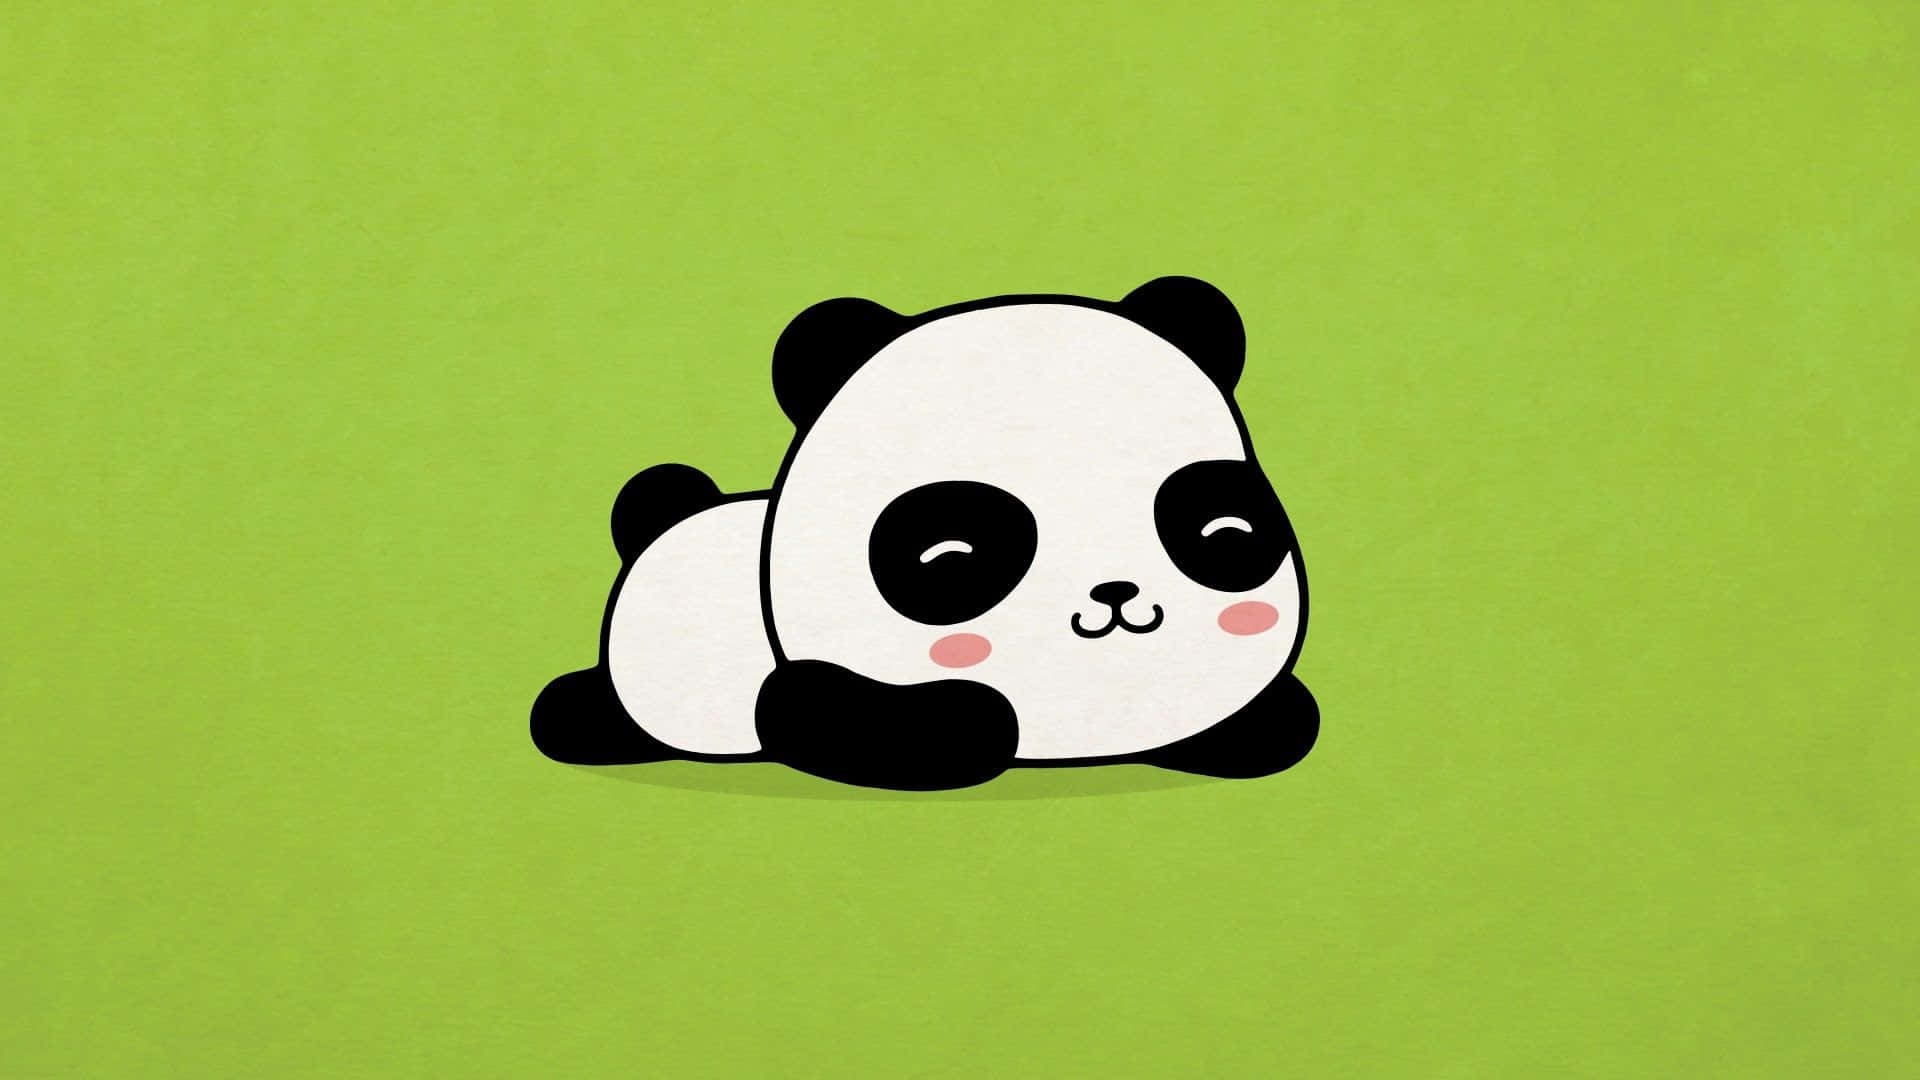 Enjoy the Kawaii Panda! Wallpaper